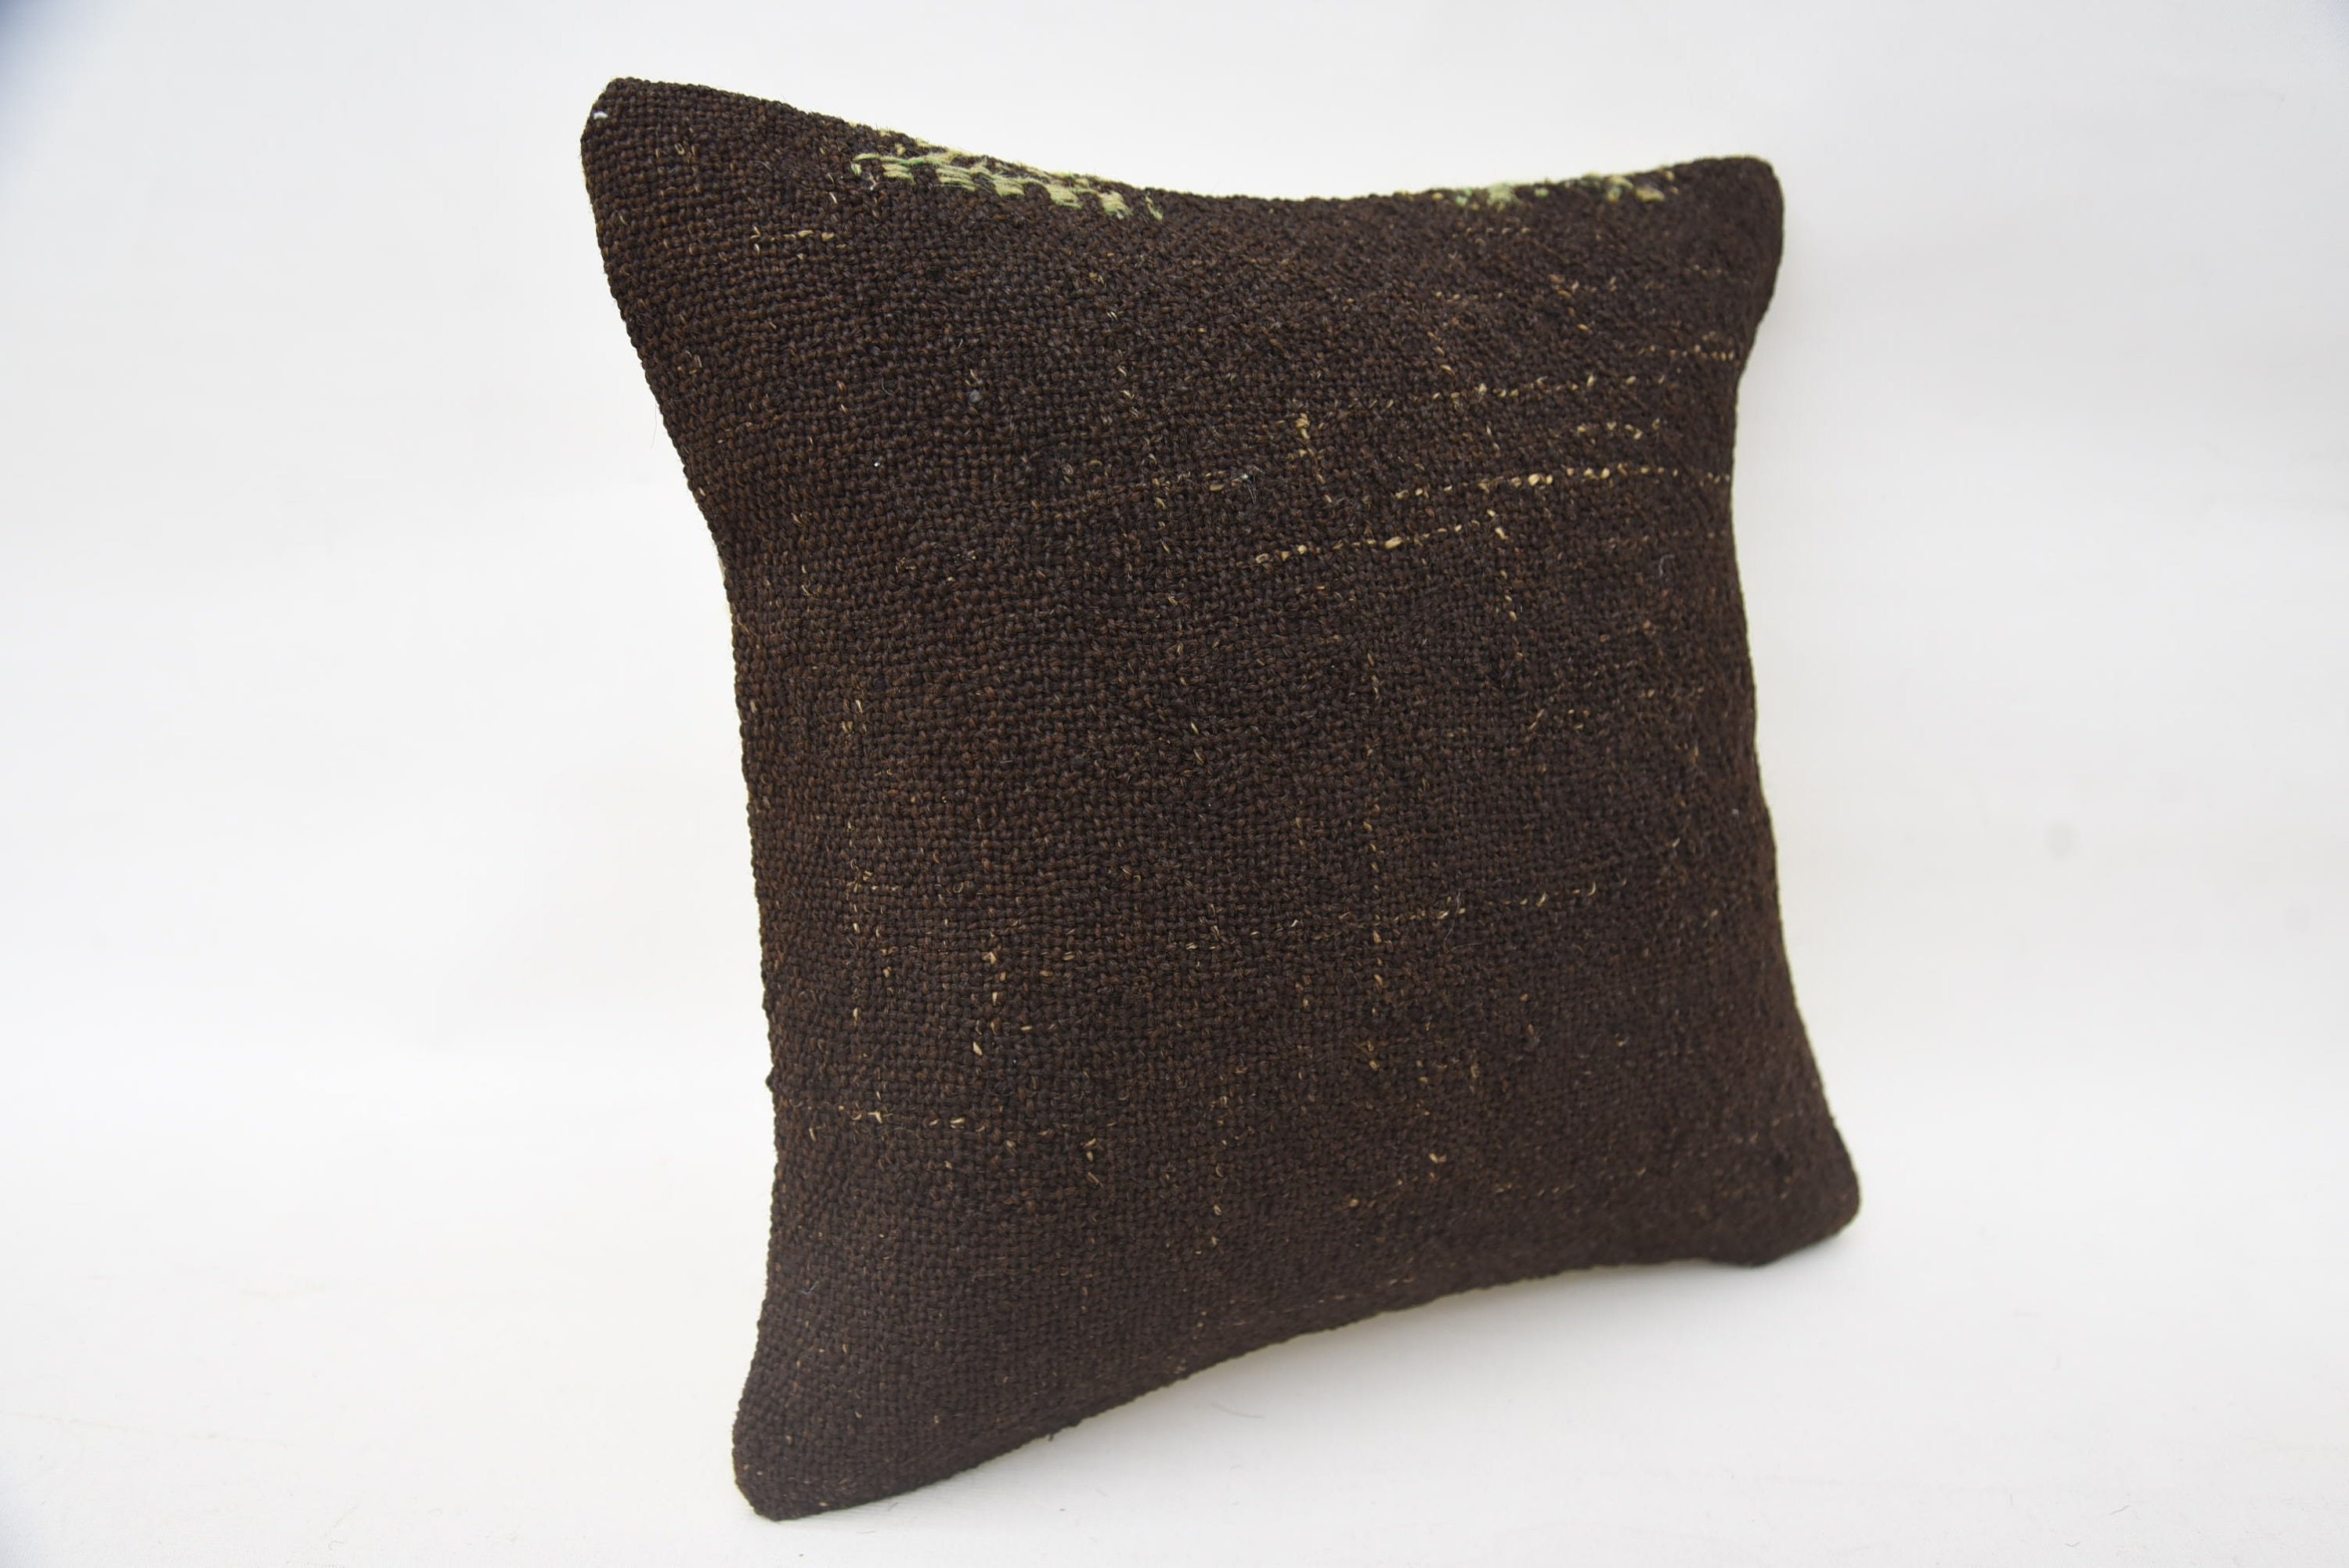 Turkish Kilim Pillow, Tapestry Pillow Case, Vintage Kilim Throw Pillow, Antique Pillows, 14"x14" Brown Cushion Cover